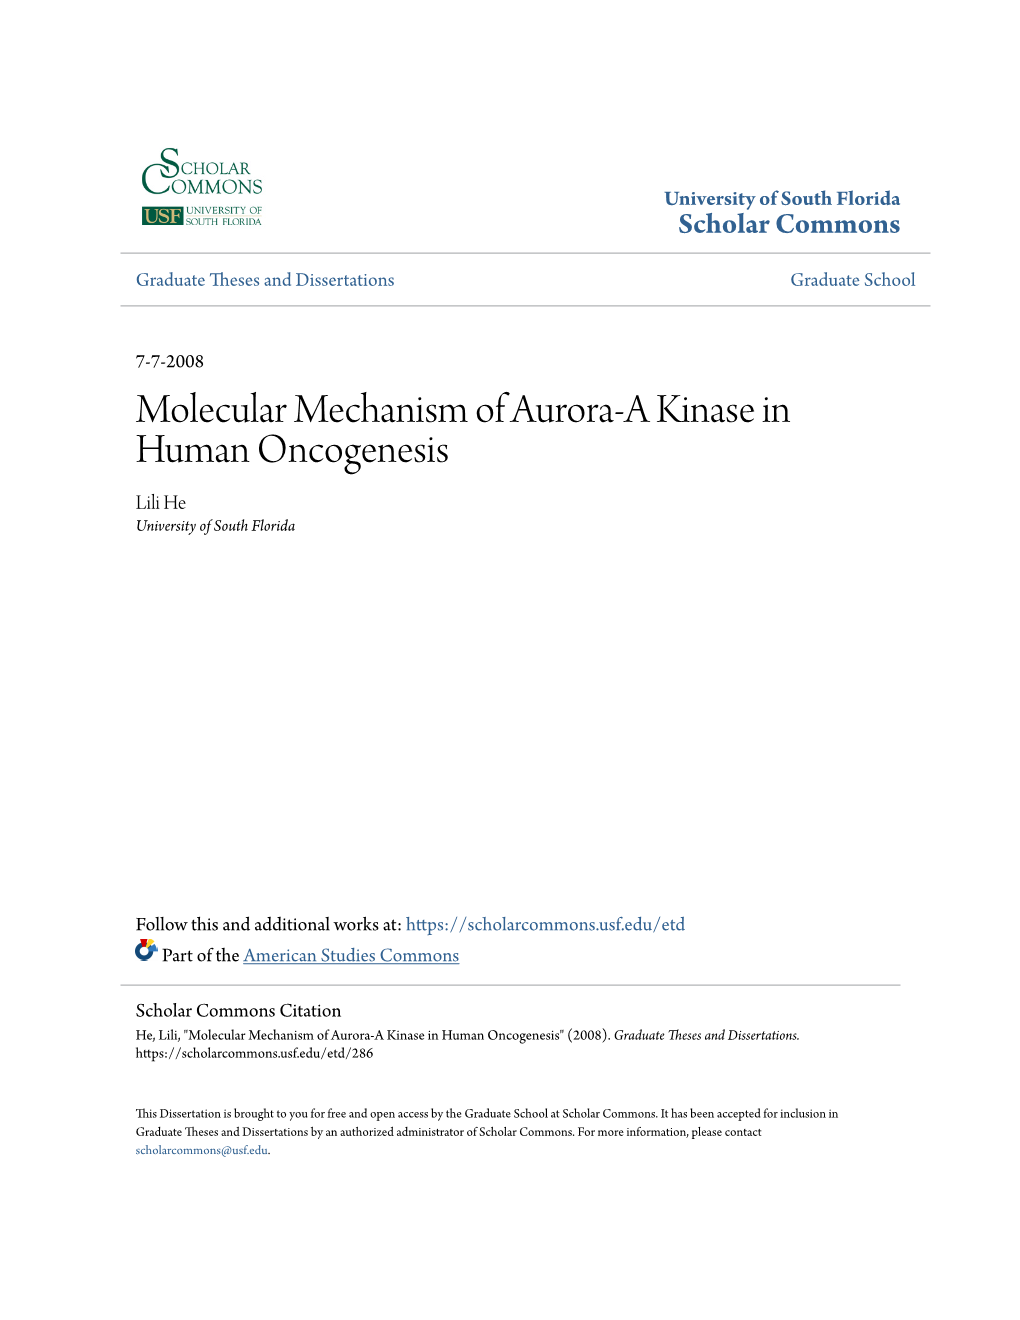 Molecular Mechanism of Aurora-A Kinase in Human Oncogenesis Lili He University of South Florida